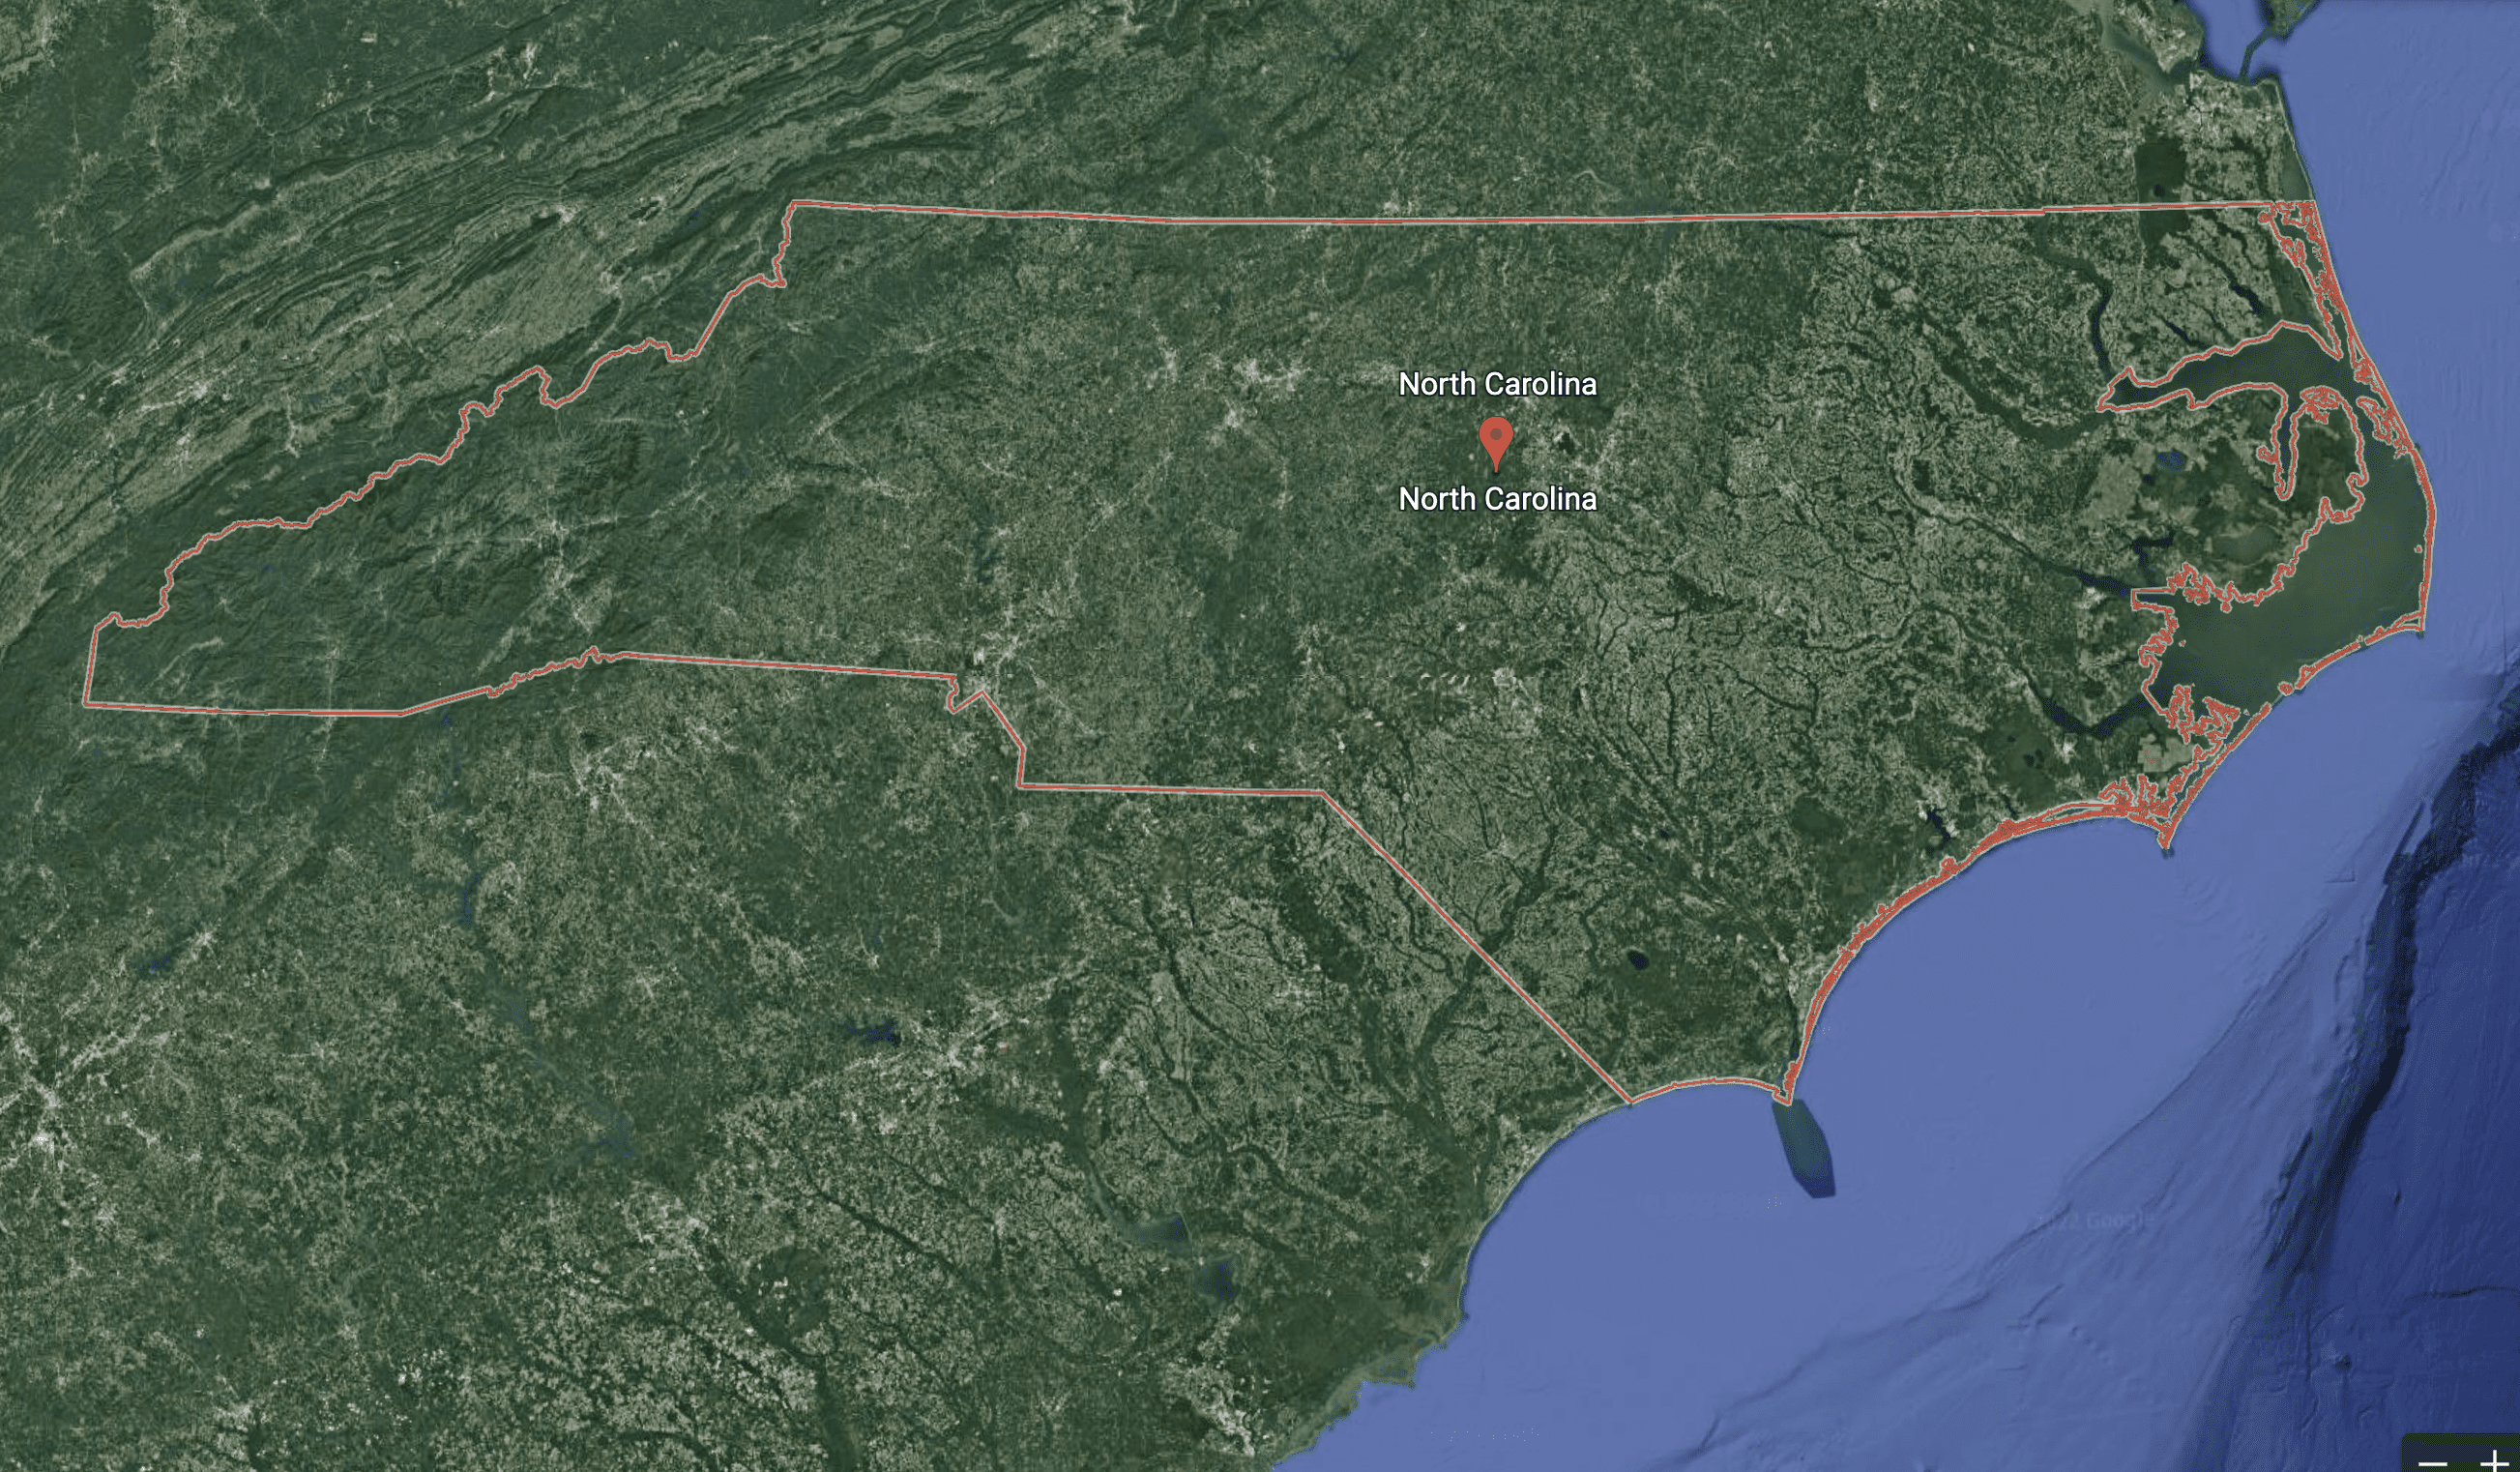 Satellite overhead image of North Carolina from Google Earth 2022